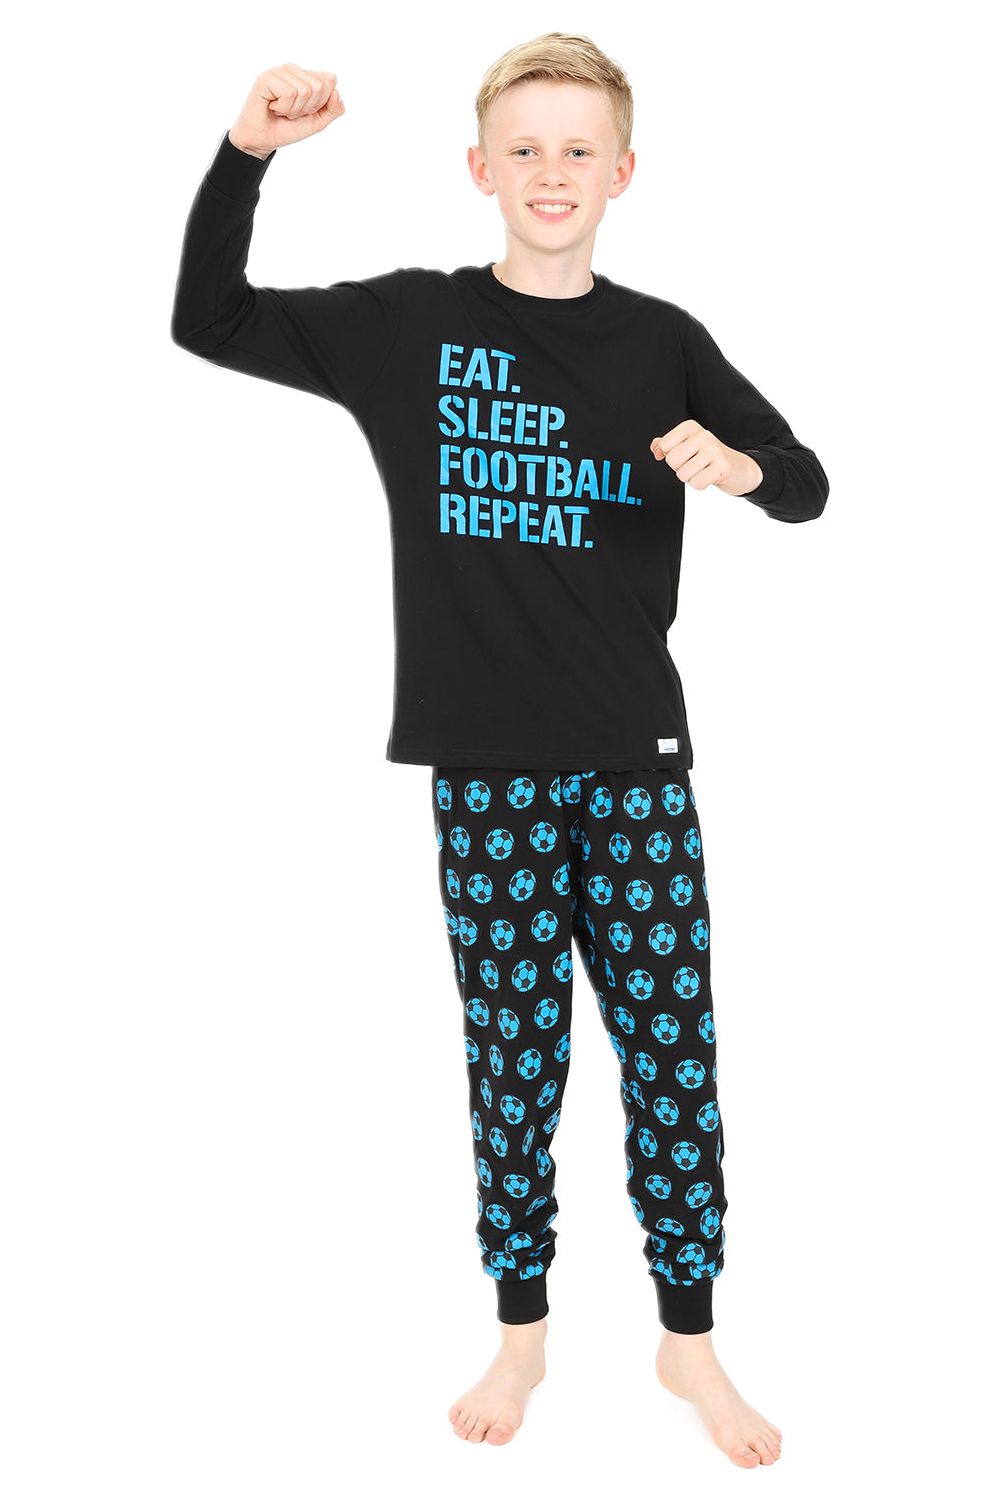 Eat Sleep Football Repeat Blue Long Pyjamas